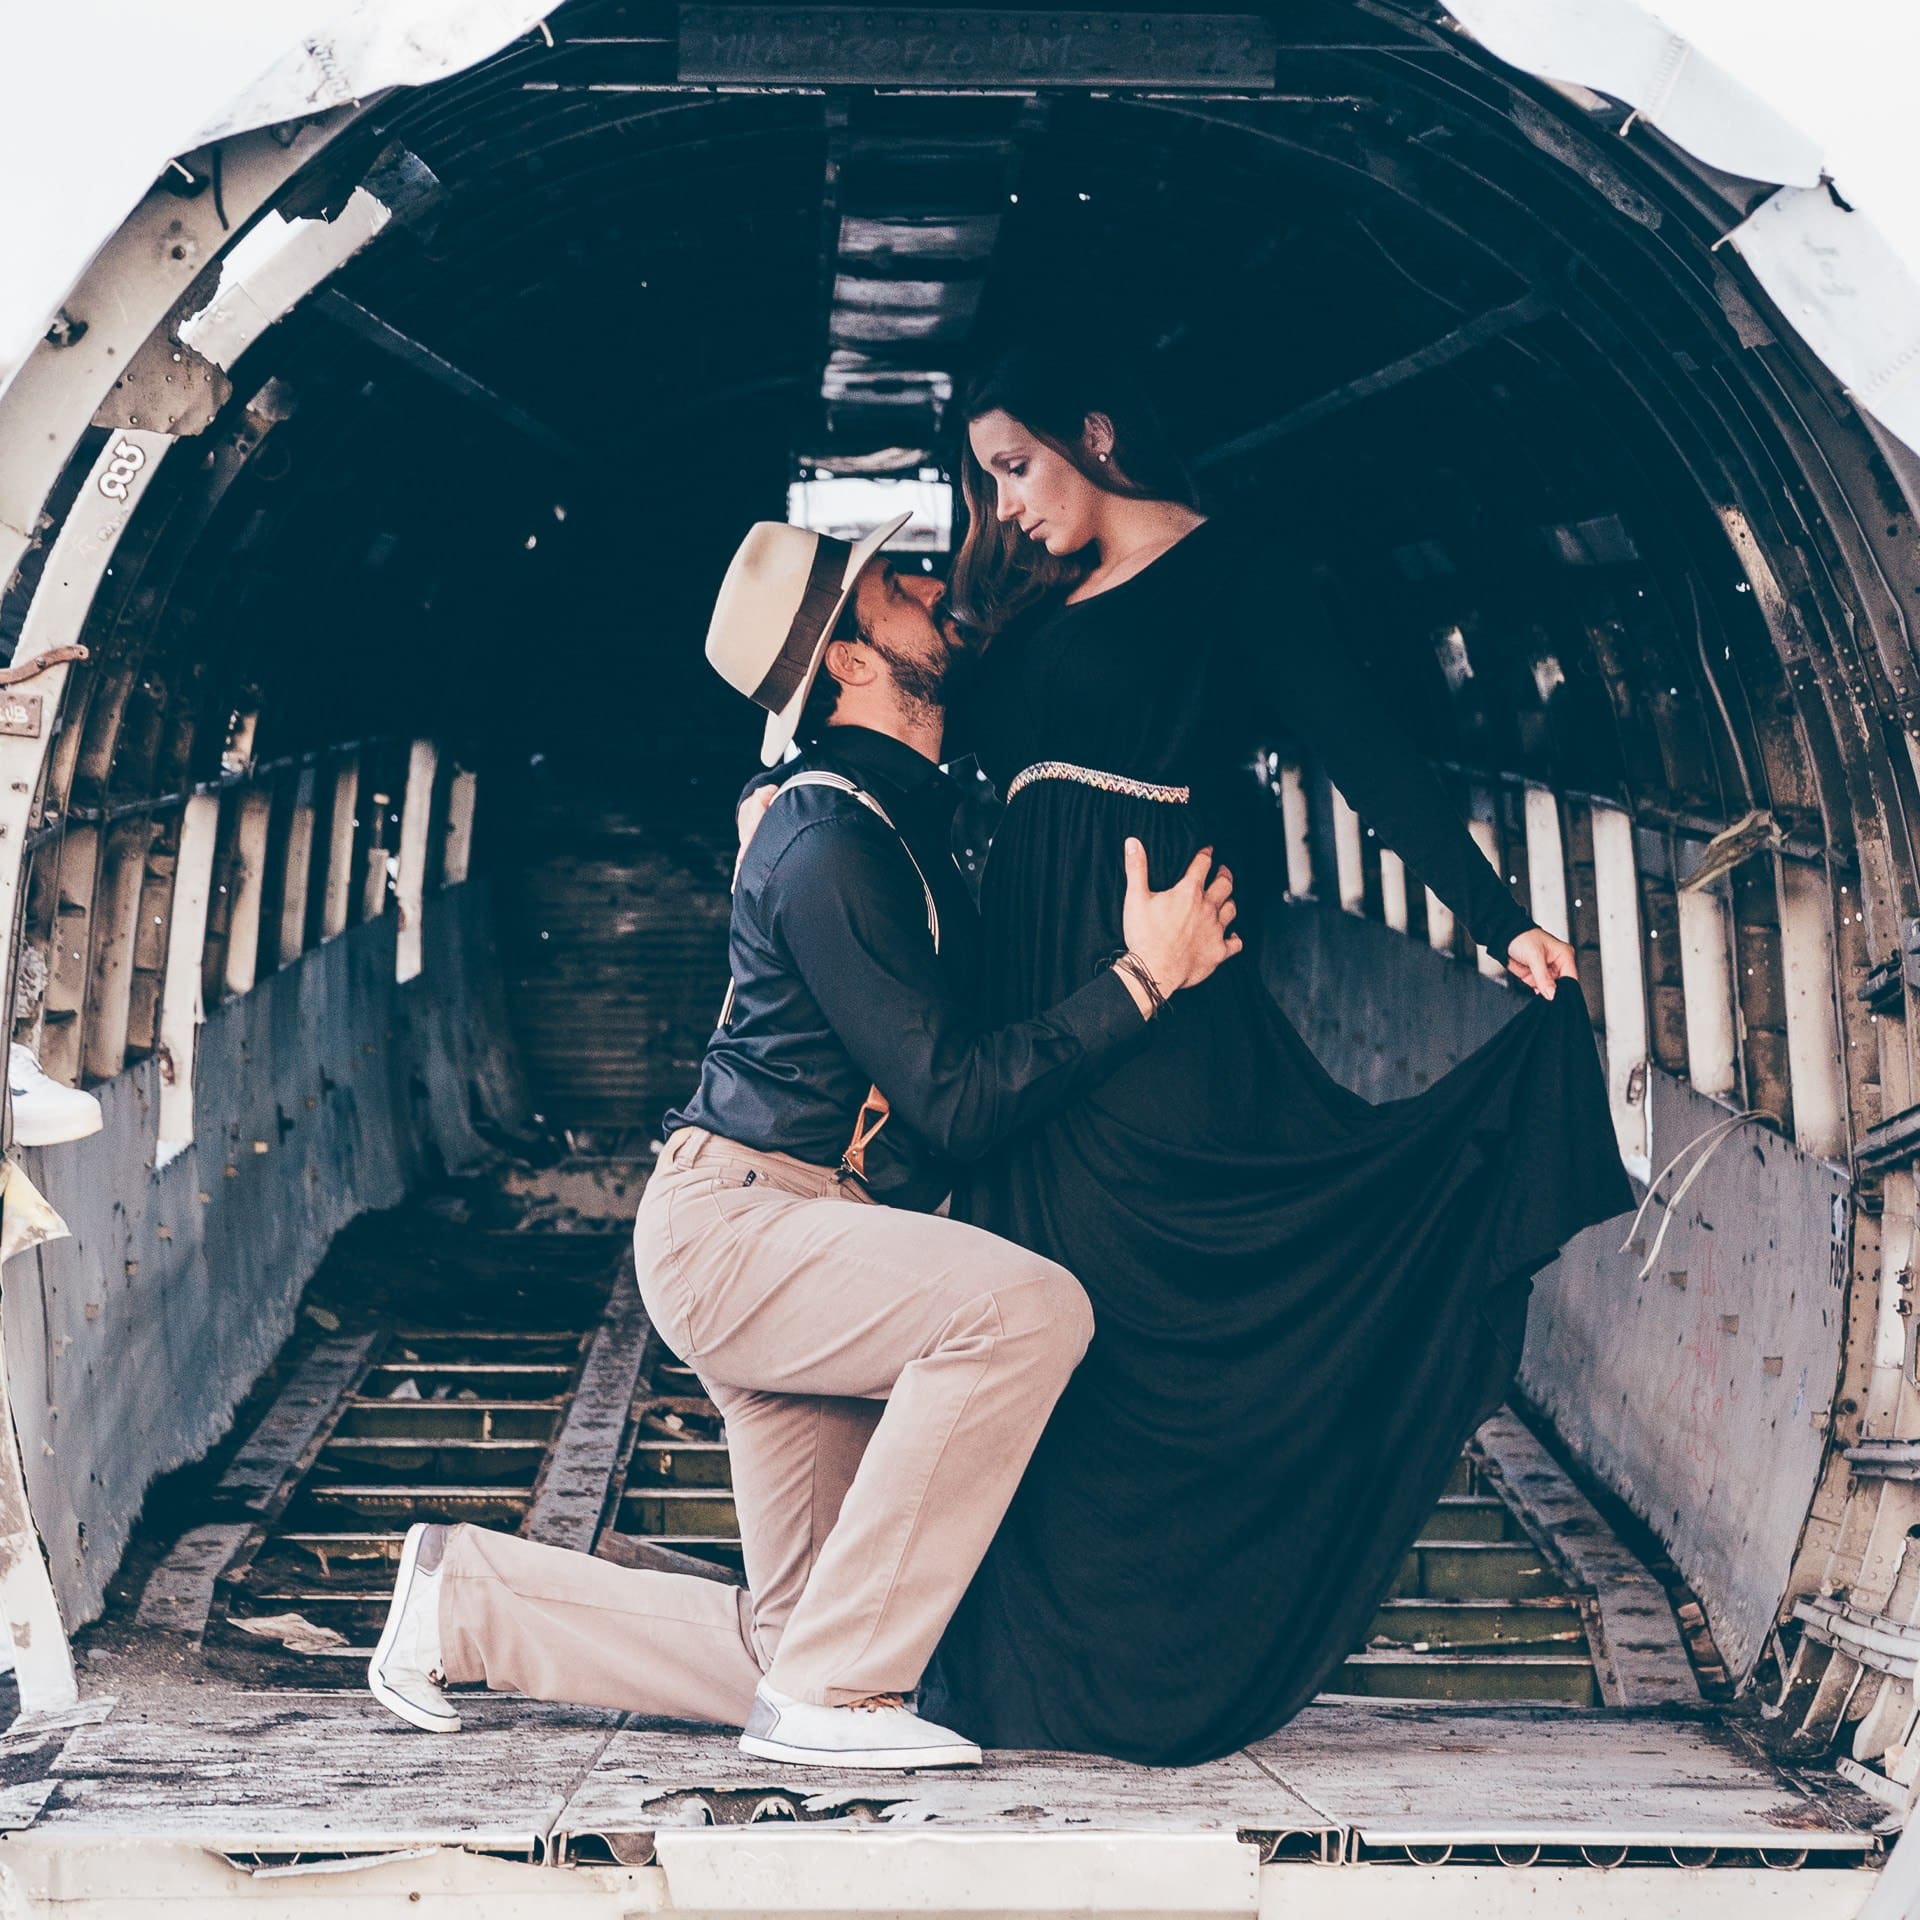 Destination-Wedding-Photographer-Iceland-Solheimasandur-PlaneWreck-MathiasBrabetz-16